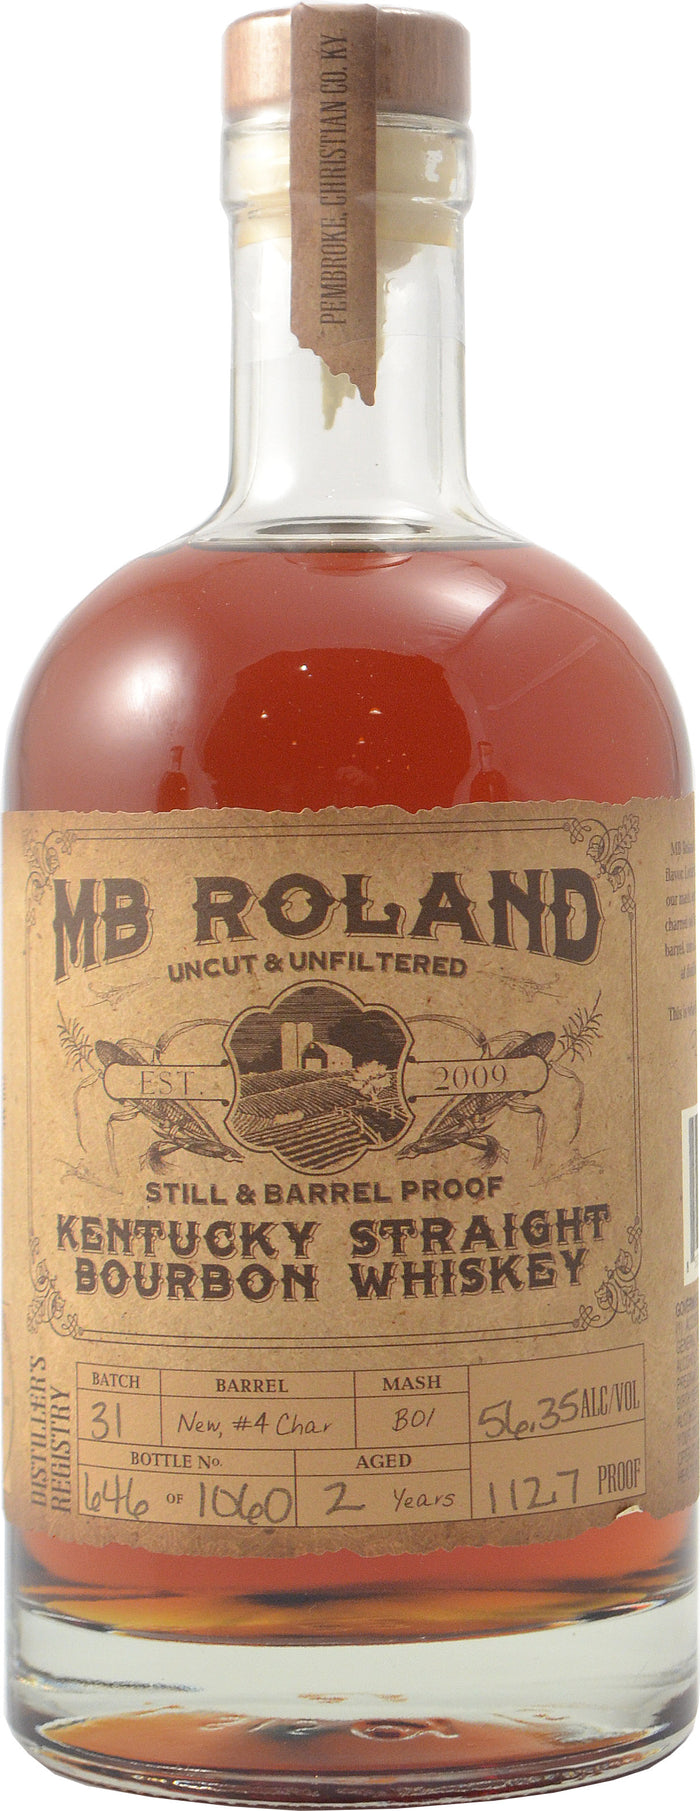 MB Roland Full Barrel Proof Kentucky Straight Bourbon Whiskey